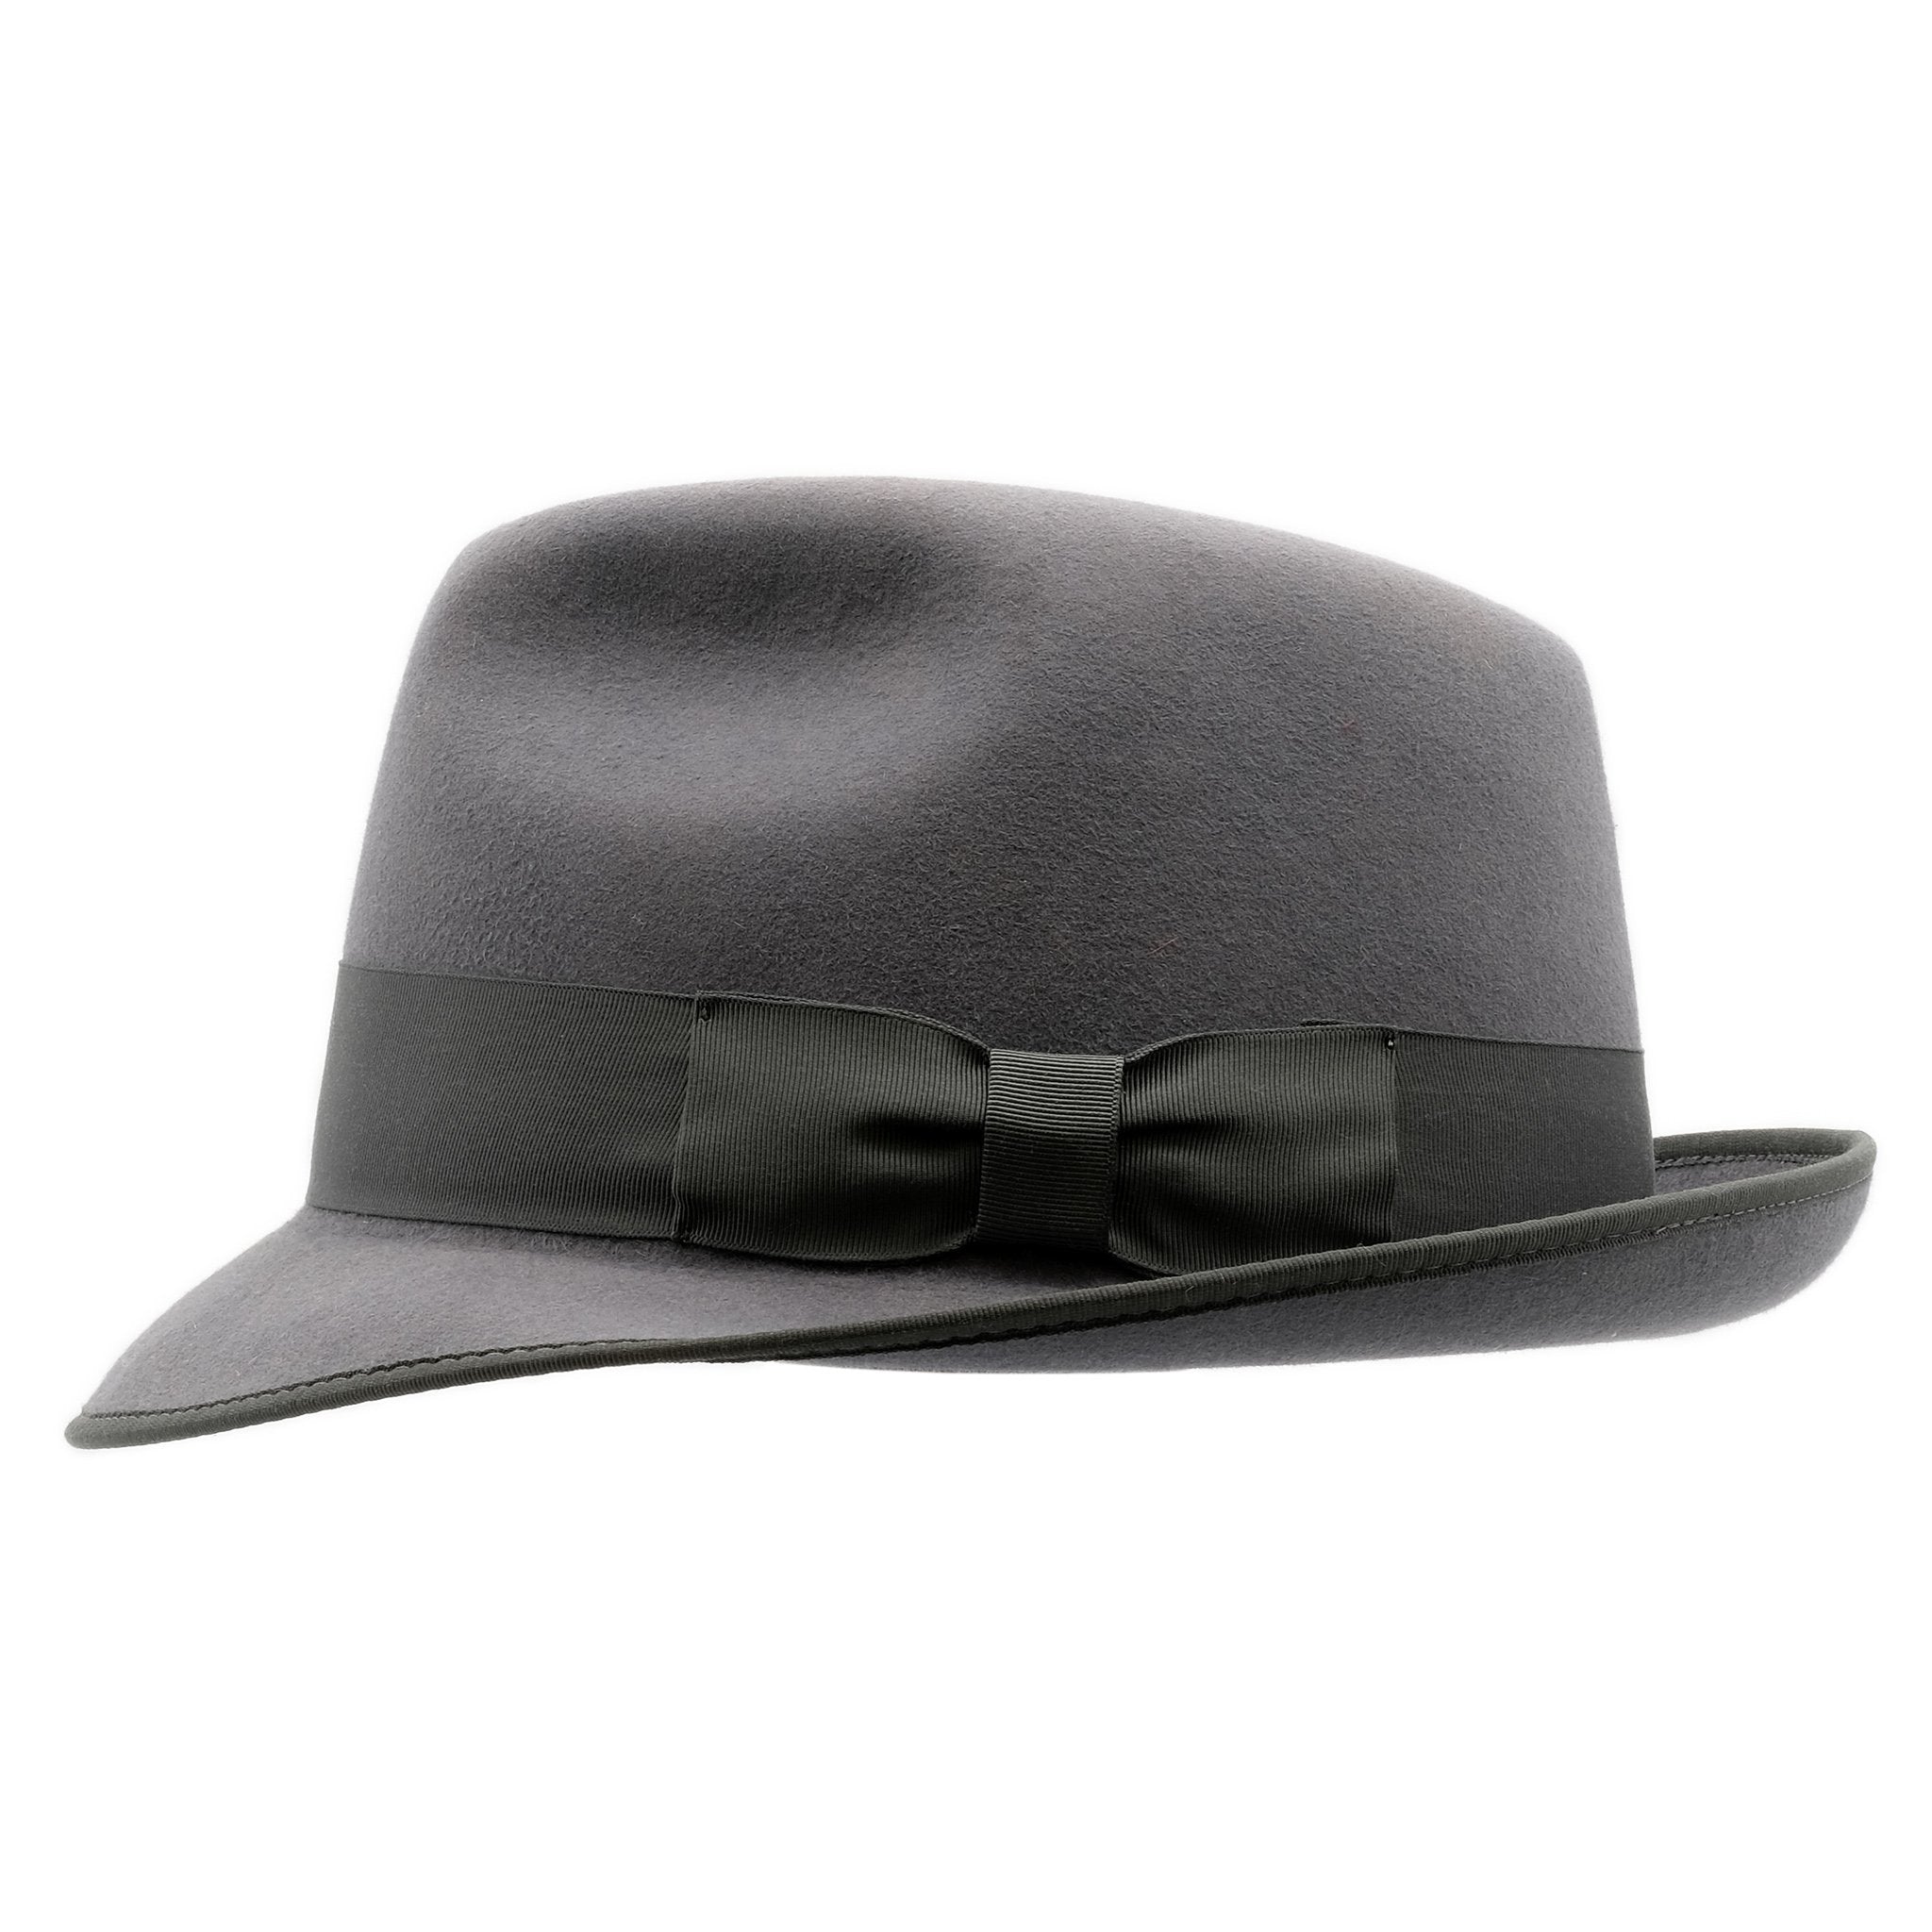 Side view of Akubra Hampton hat in Cruiser Grey colour